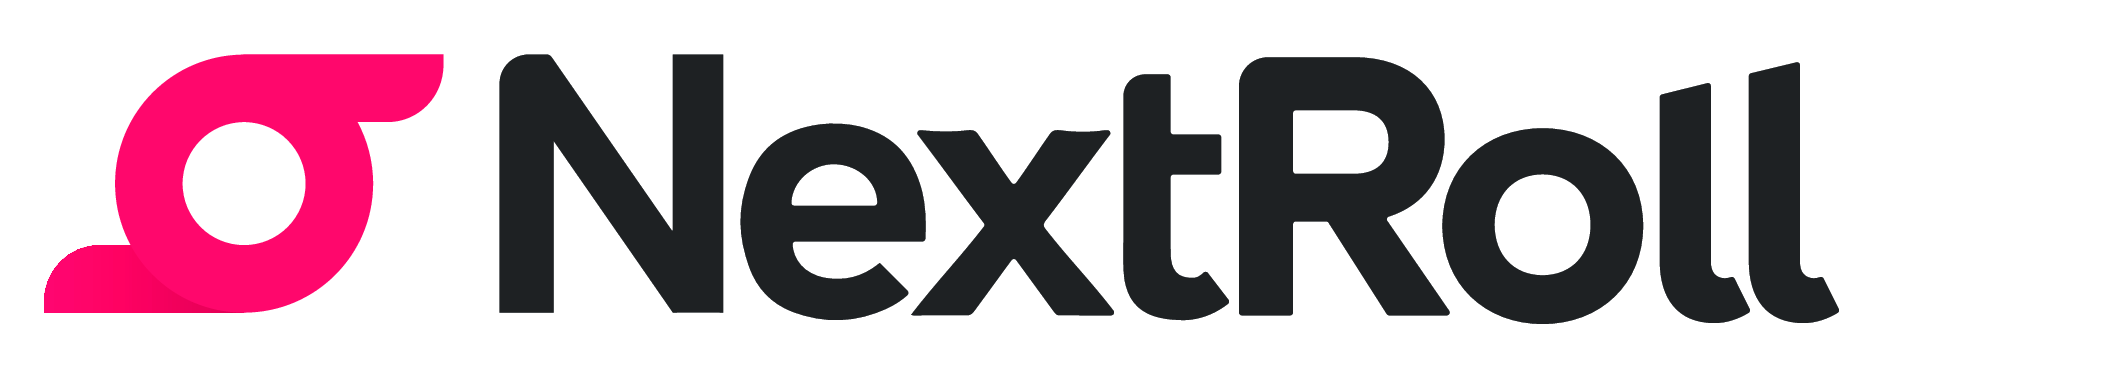 NextRoll-logo.png